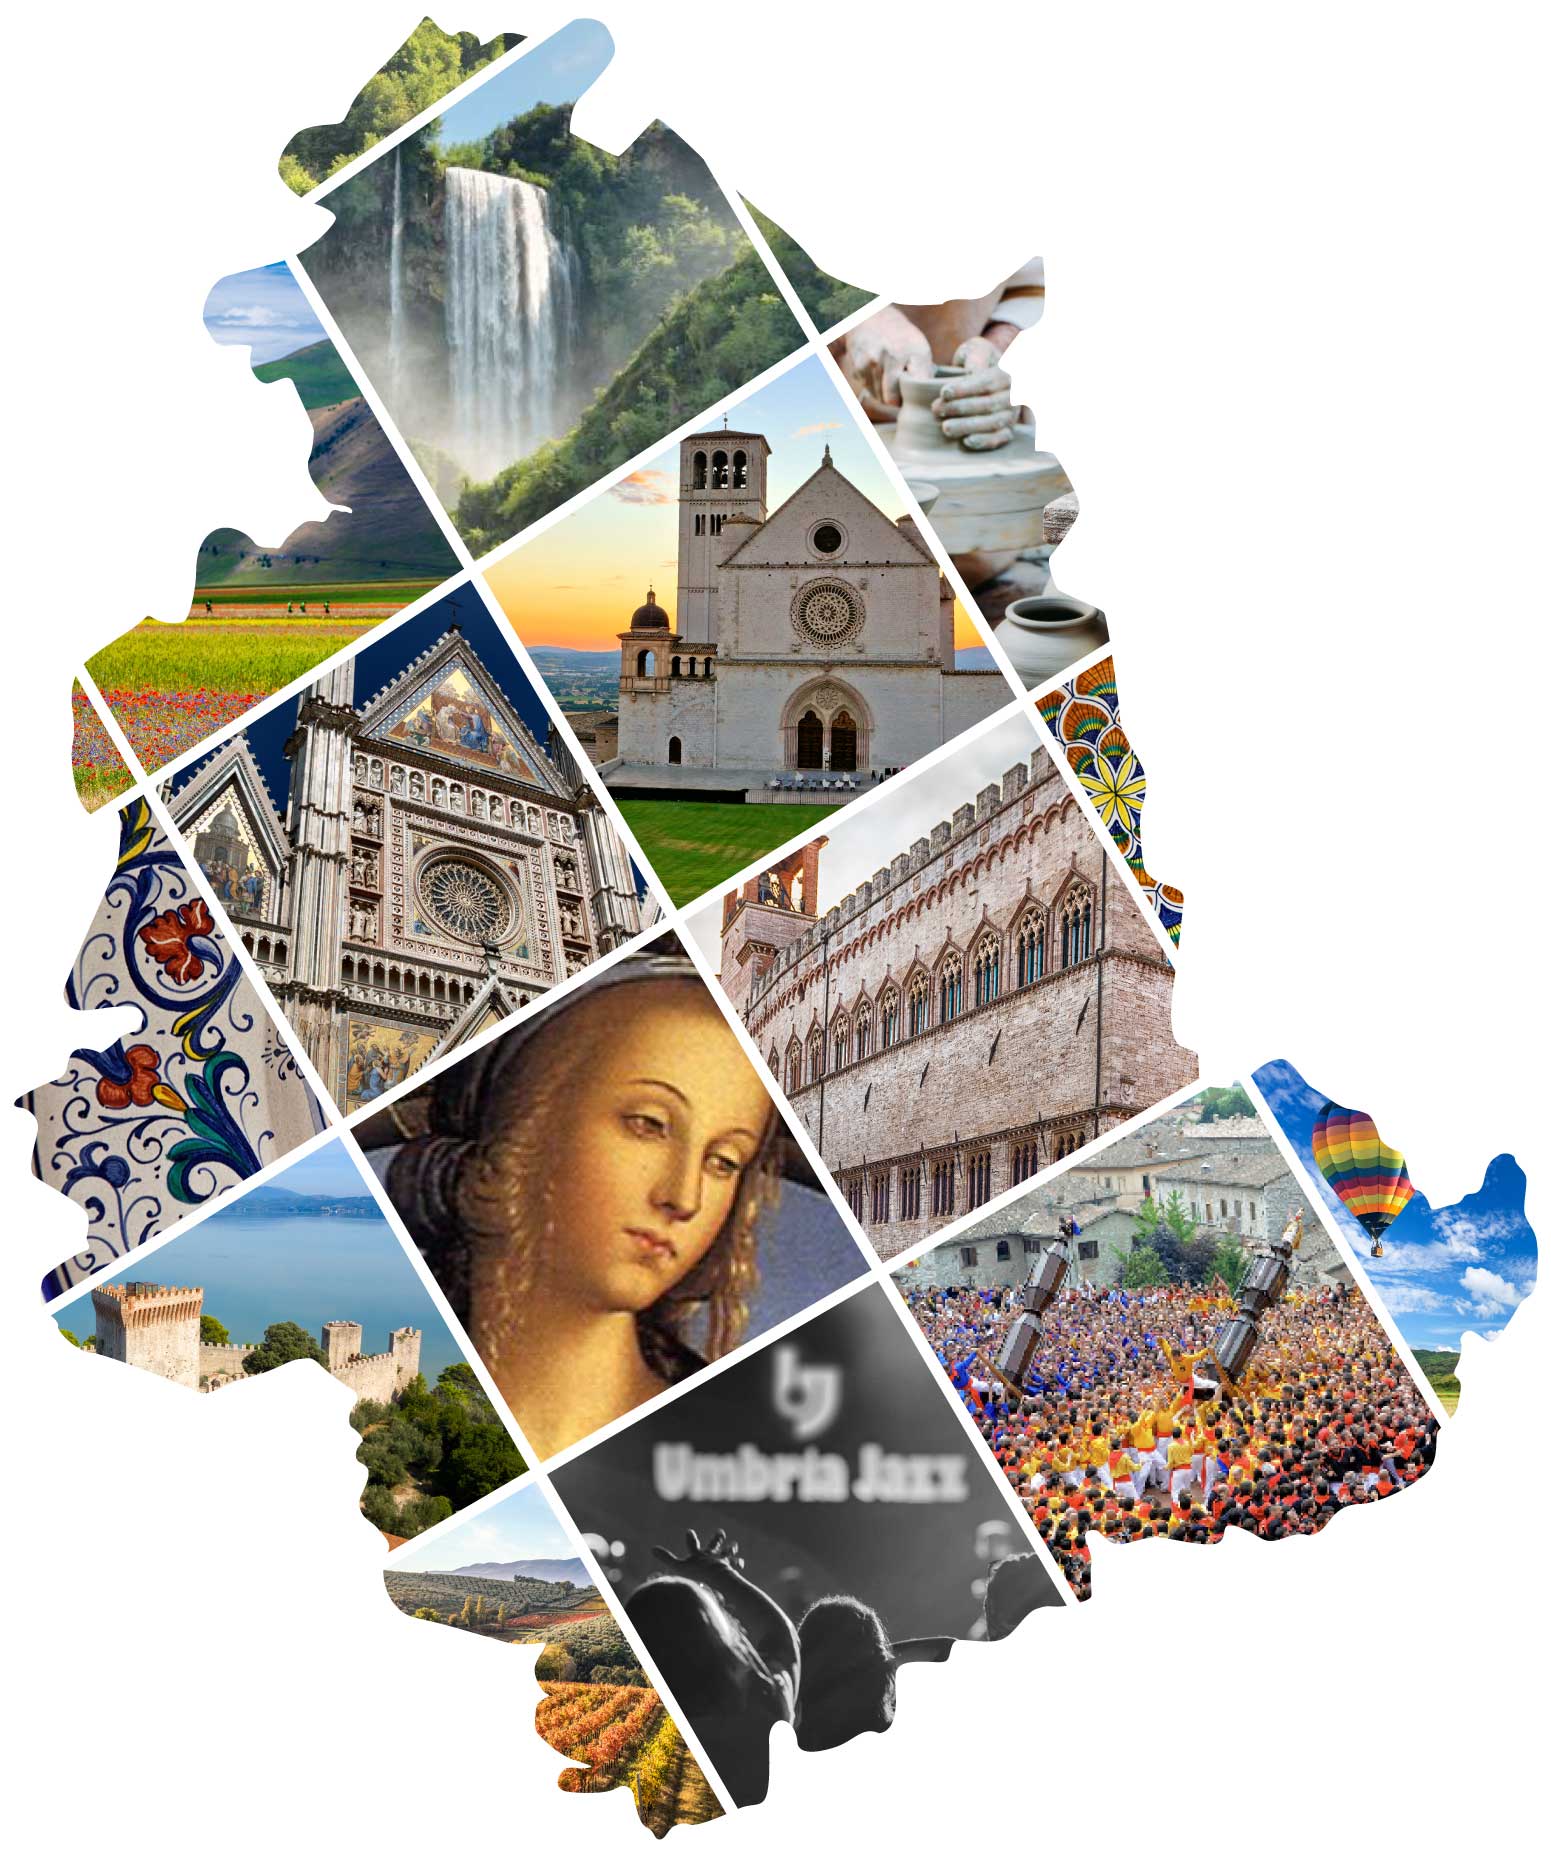 Umbria, Cuore Verde d'Italia - Umbriafiere. Un mosaico di natura, storia, arte, cultura, artigianato, folklore